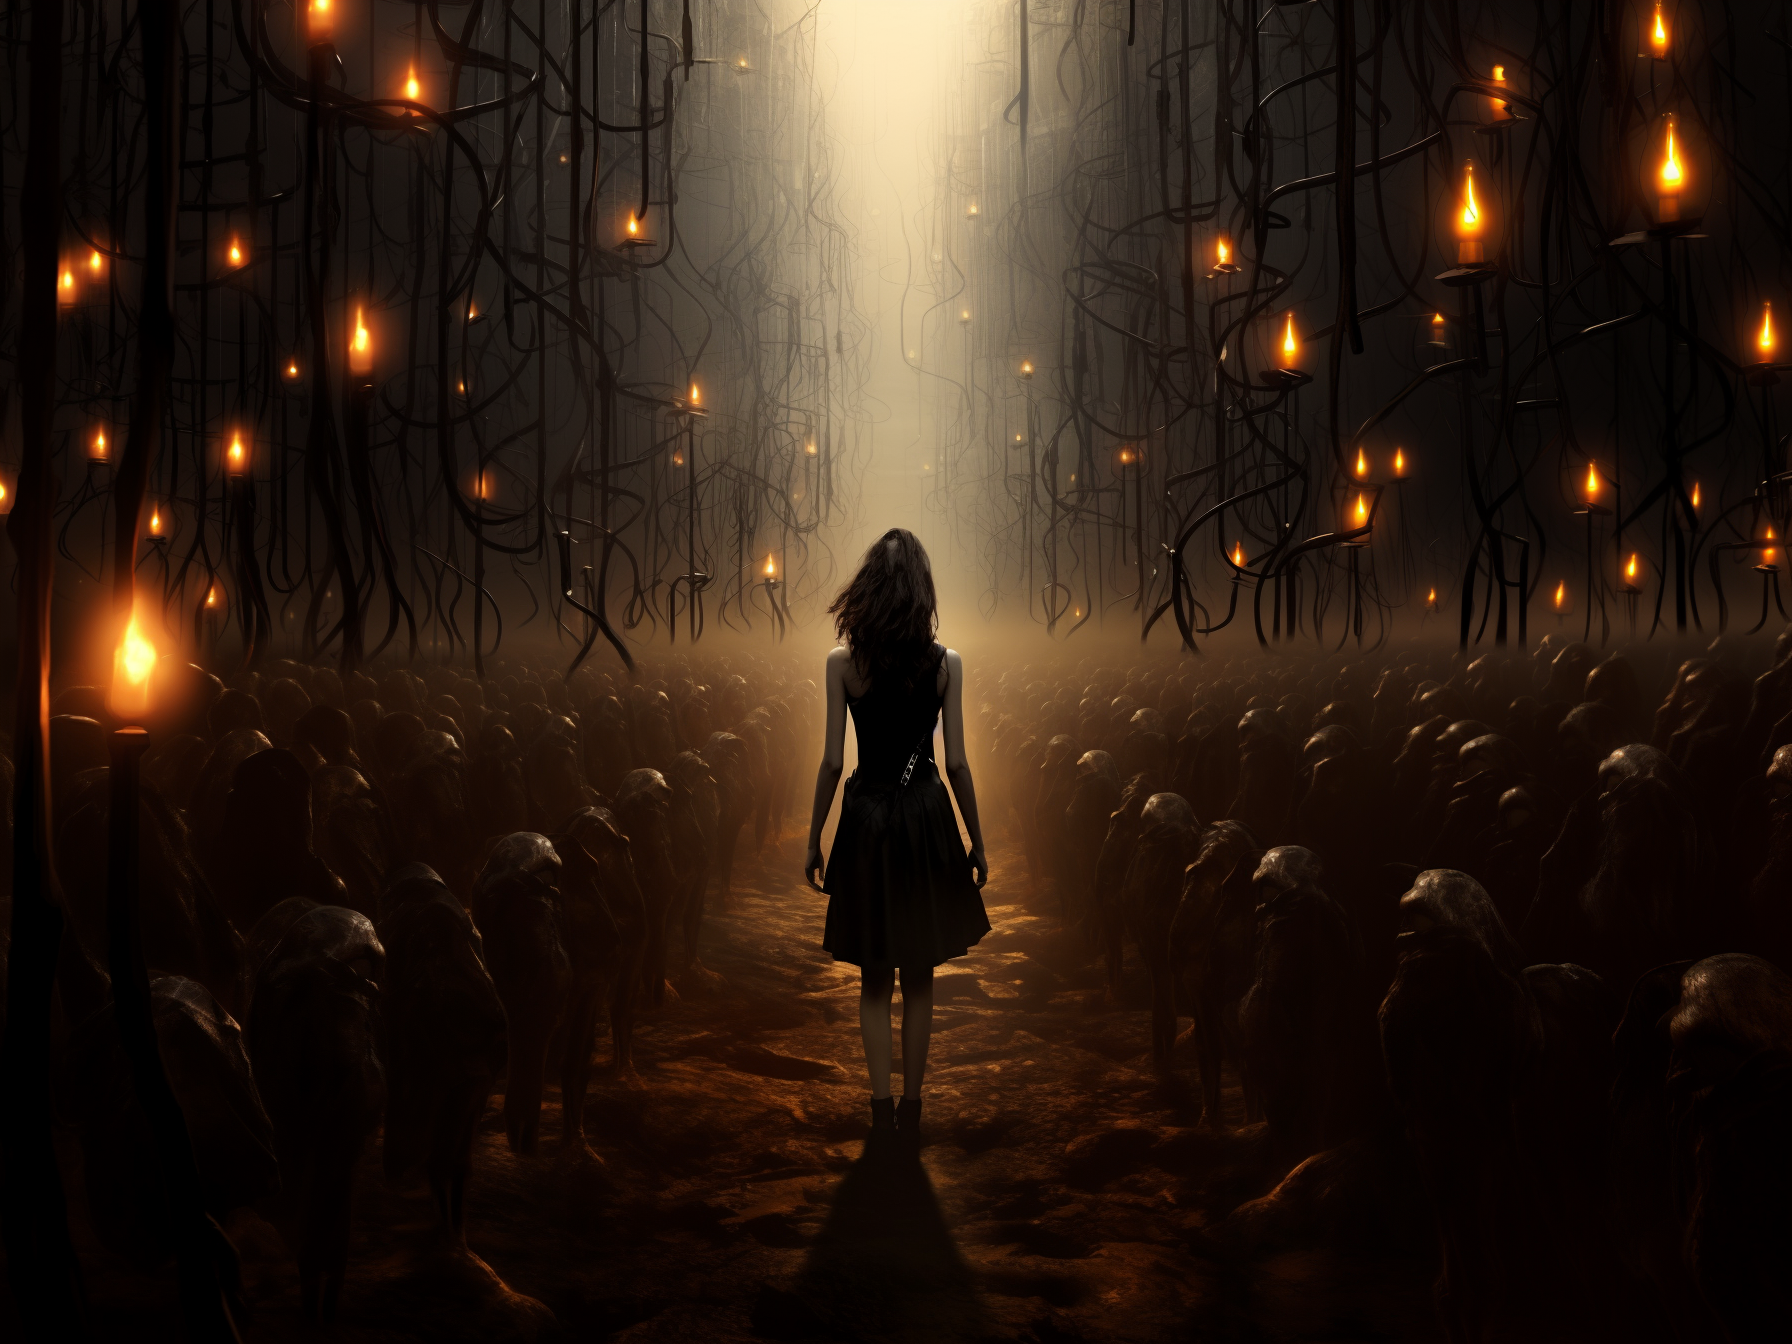 Alone (little nightmares 3) by XxSixIsSmol09xX on DeviantArt